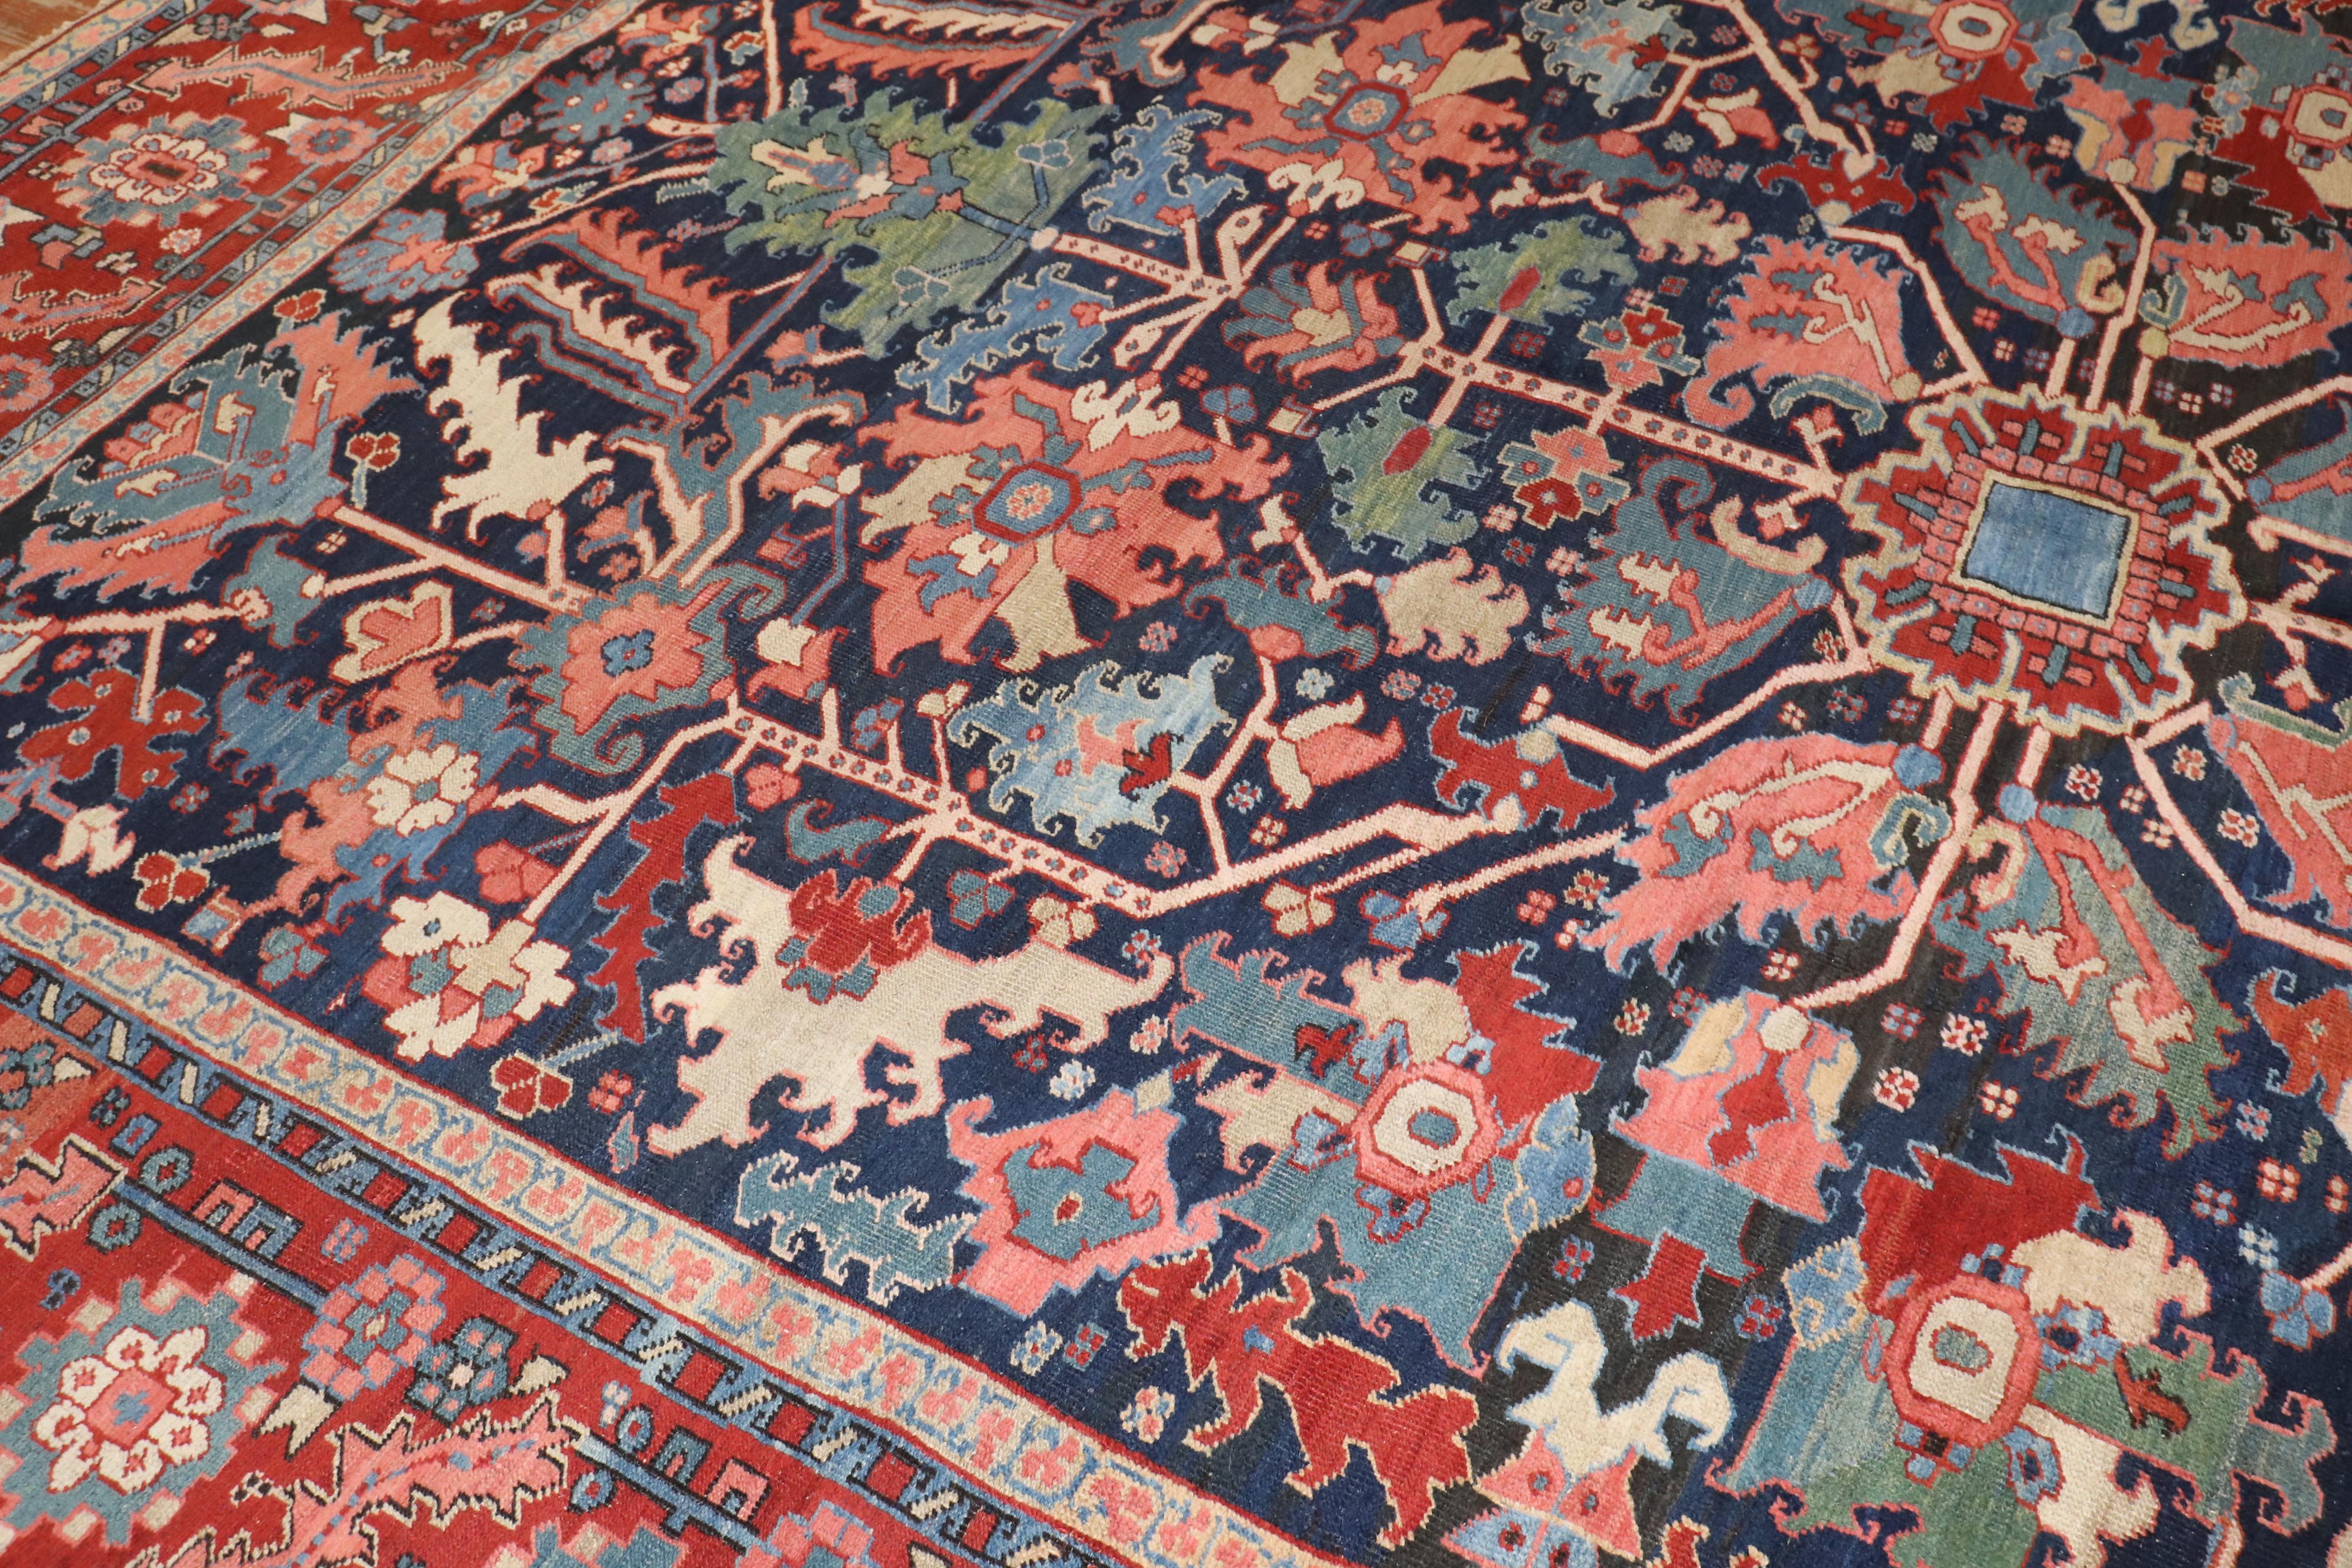 Zabihi Collection Stellar Antique Persian Serapi Carpet In Good Condition For Sale In New York, NY